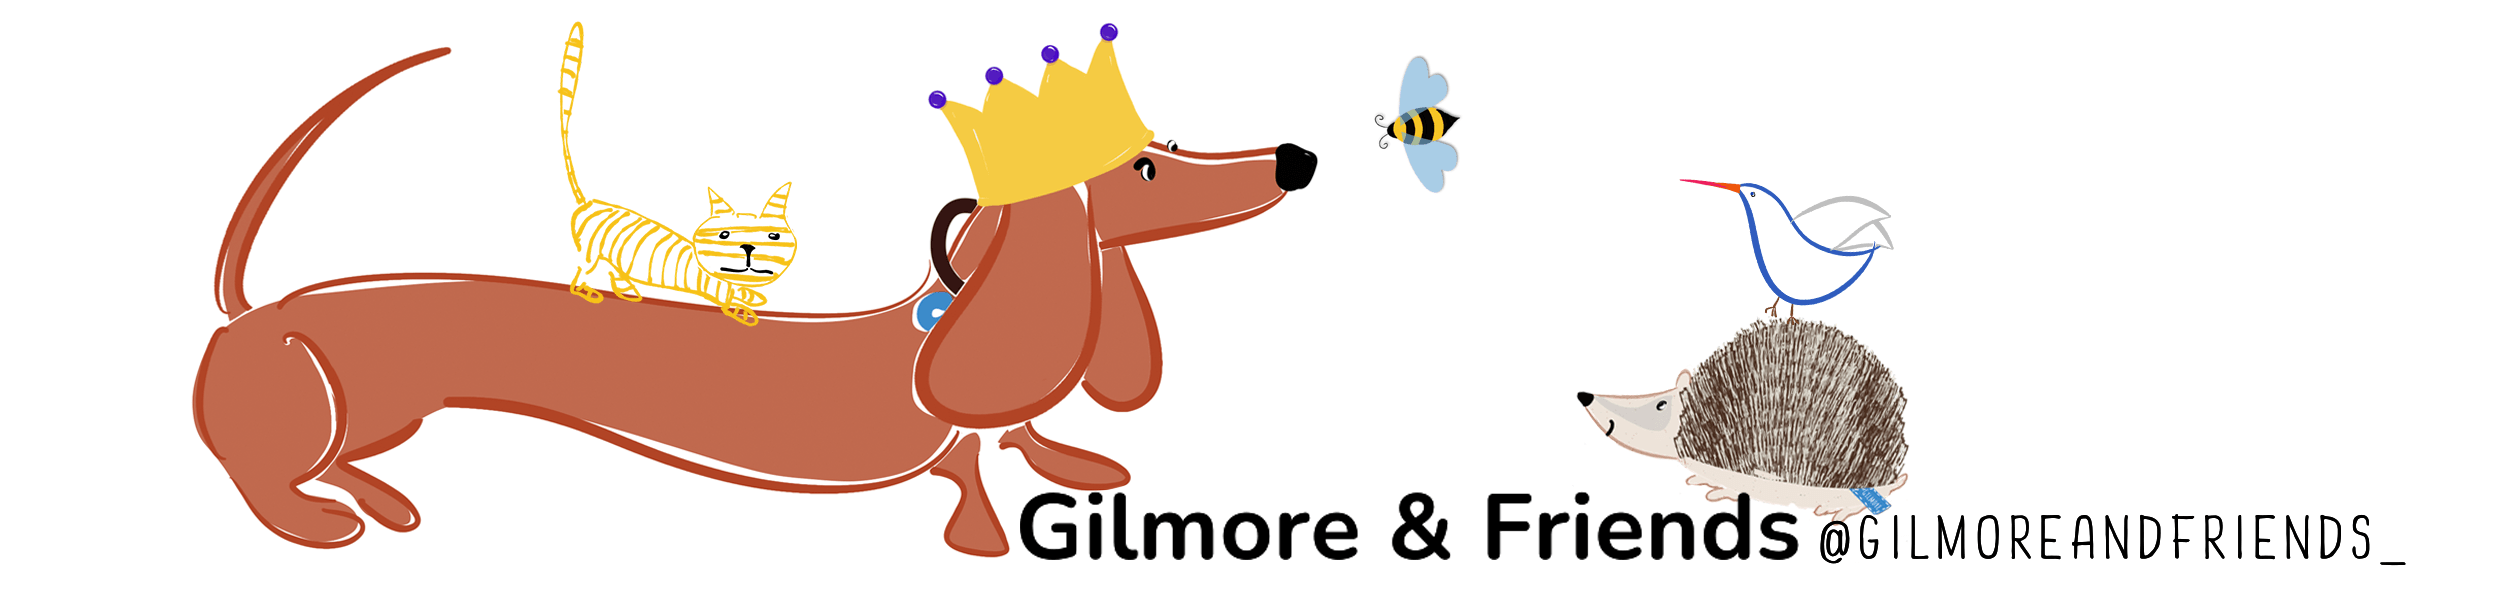 Gilmore & Friends